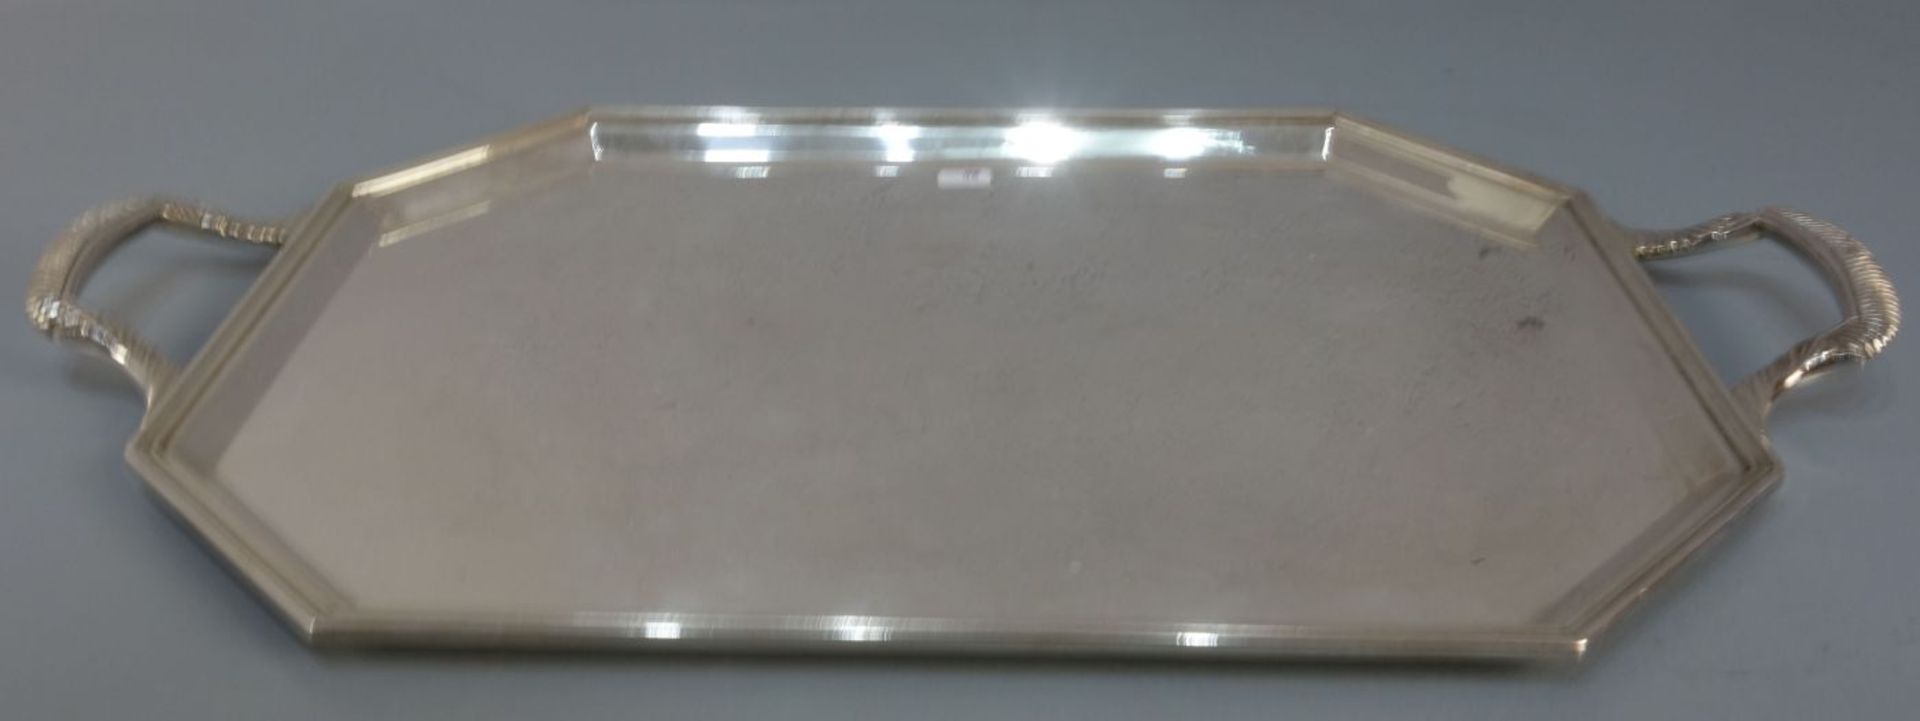 VERSILBERTES TABLETT / plated tray, versilbertes Metall, Manufaktur J. B. Chatterly & Sons Ltd., - Image 2 of 4